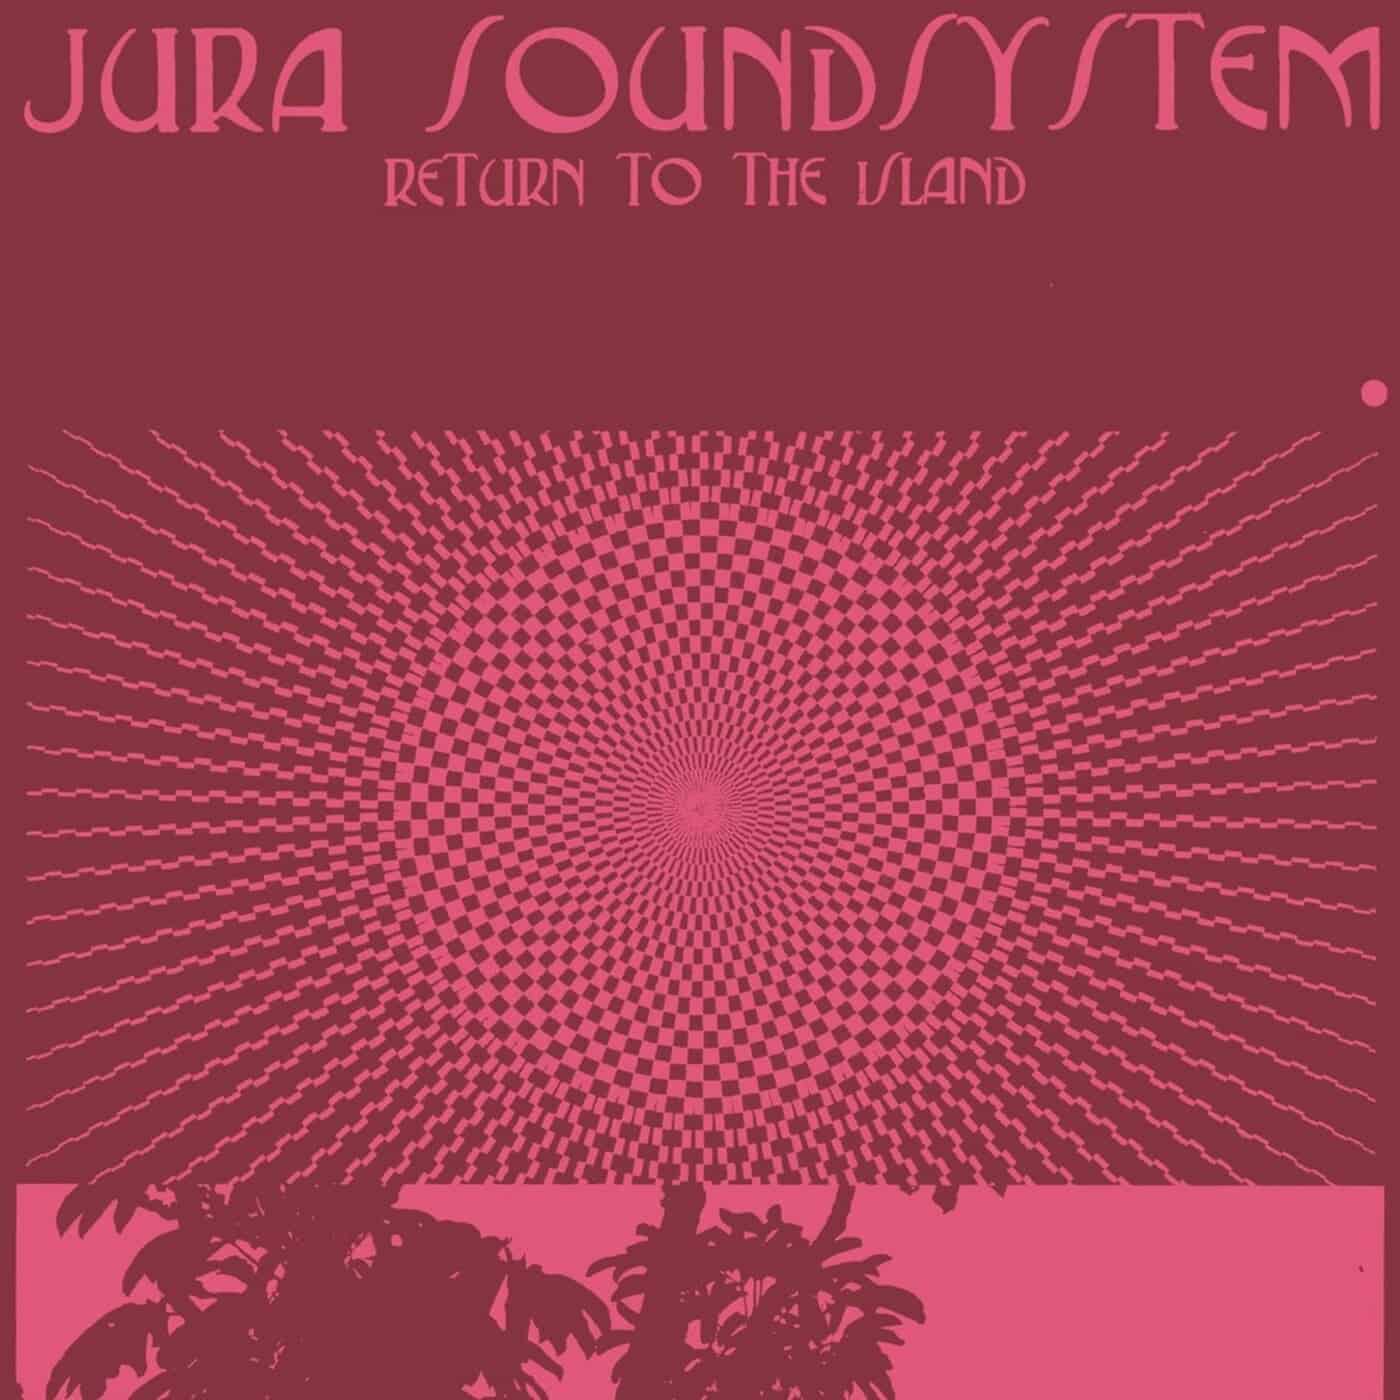 Download Jura Soundsystem - Return to the Island on Electrobuzz